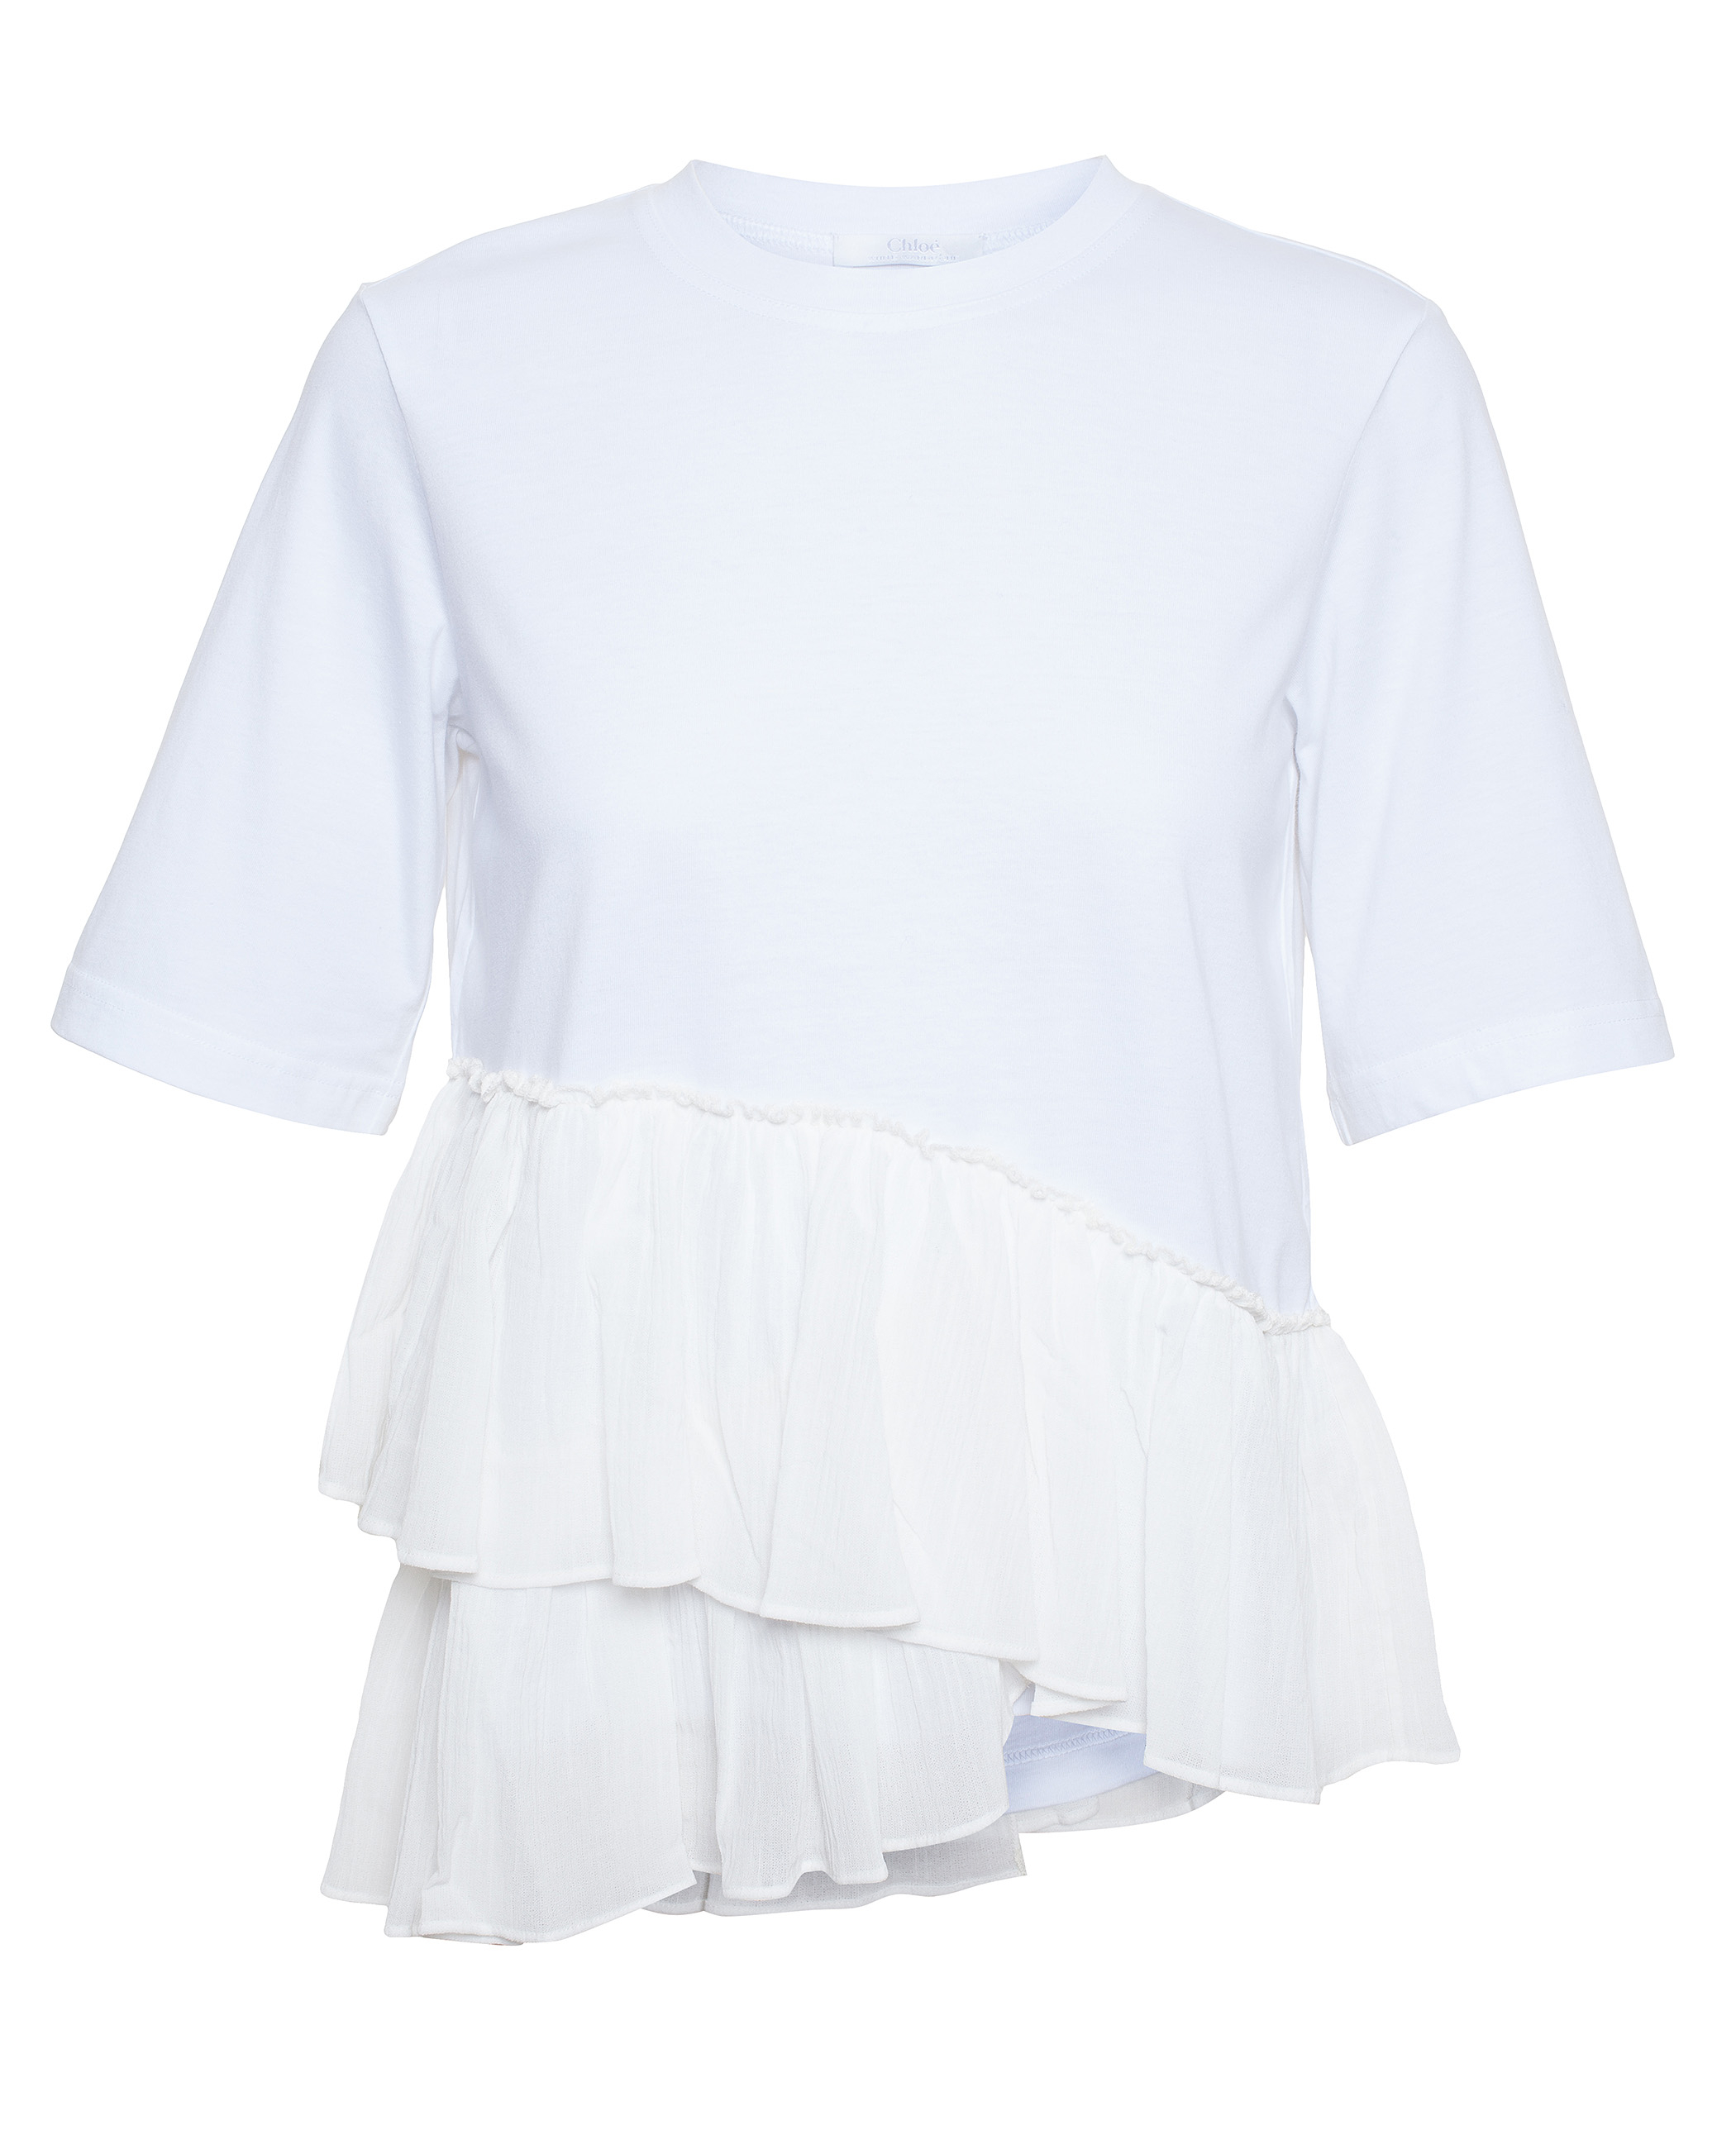 Lyst - Chloé T-Shirt With Ruffle Hem in White